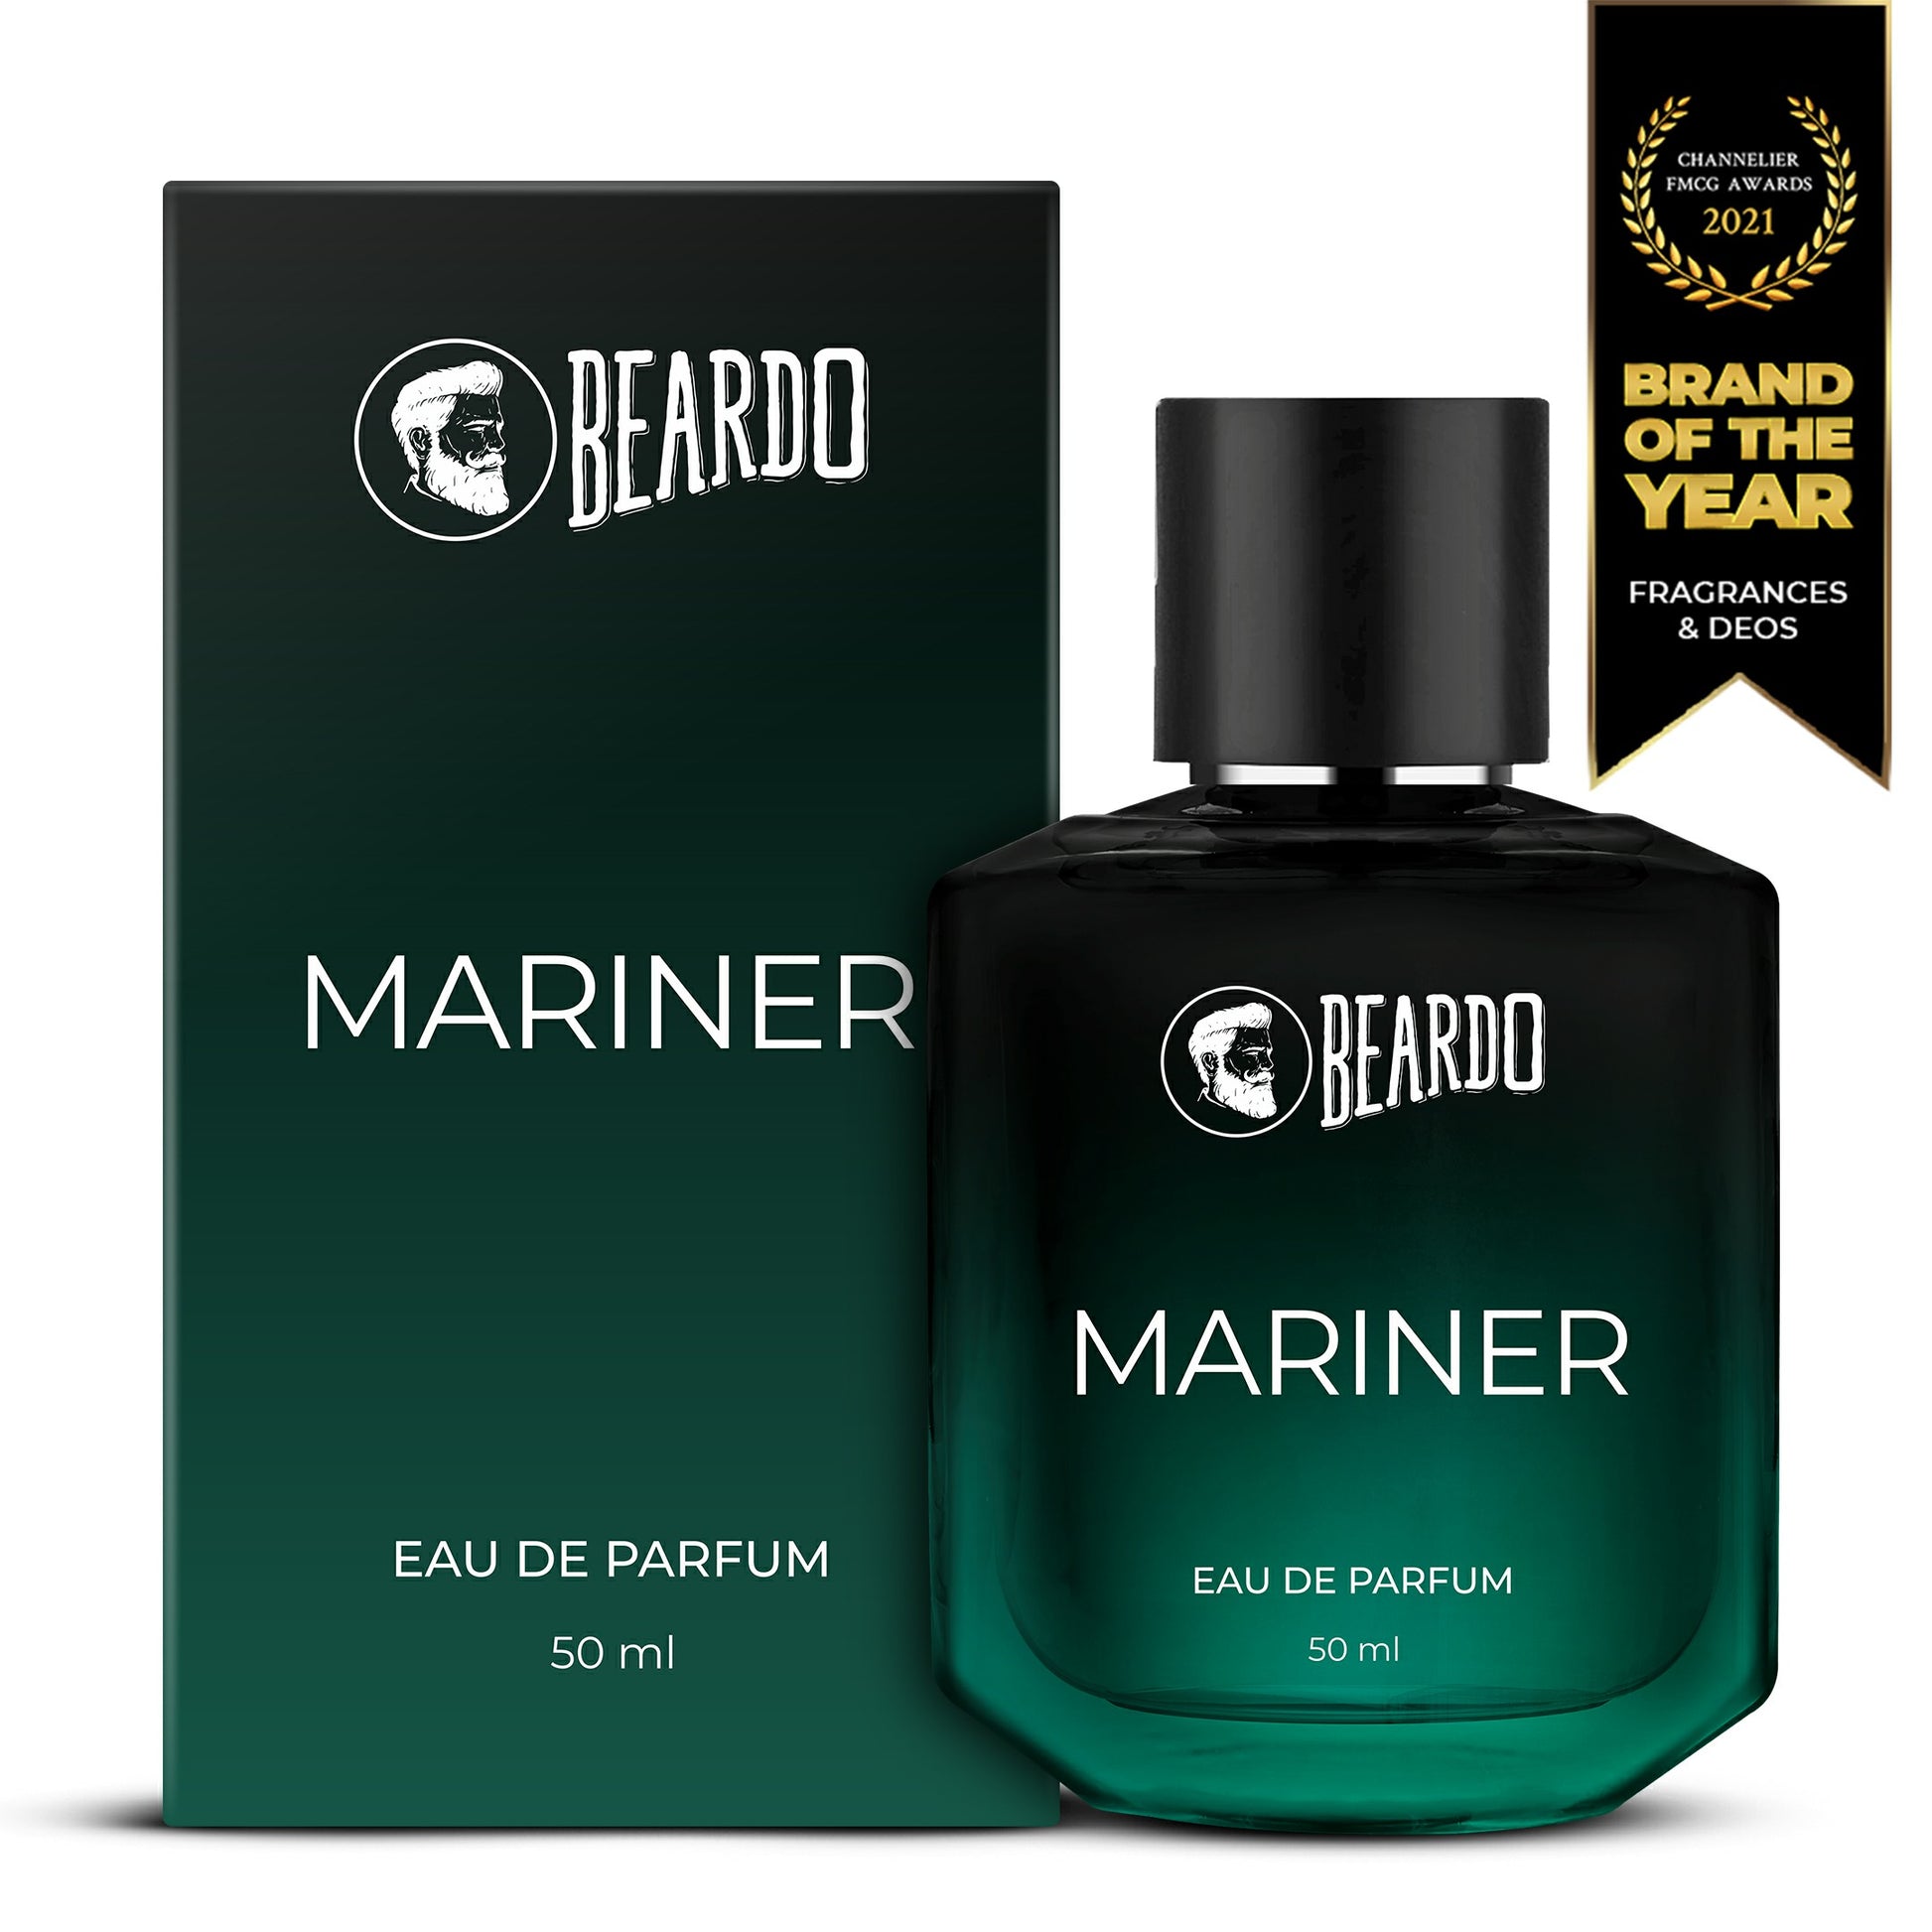 beardo mariner perfume, eau de parfum